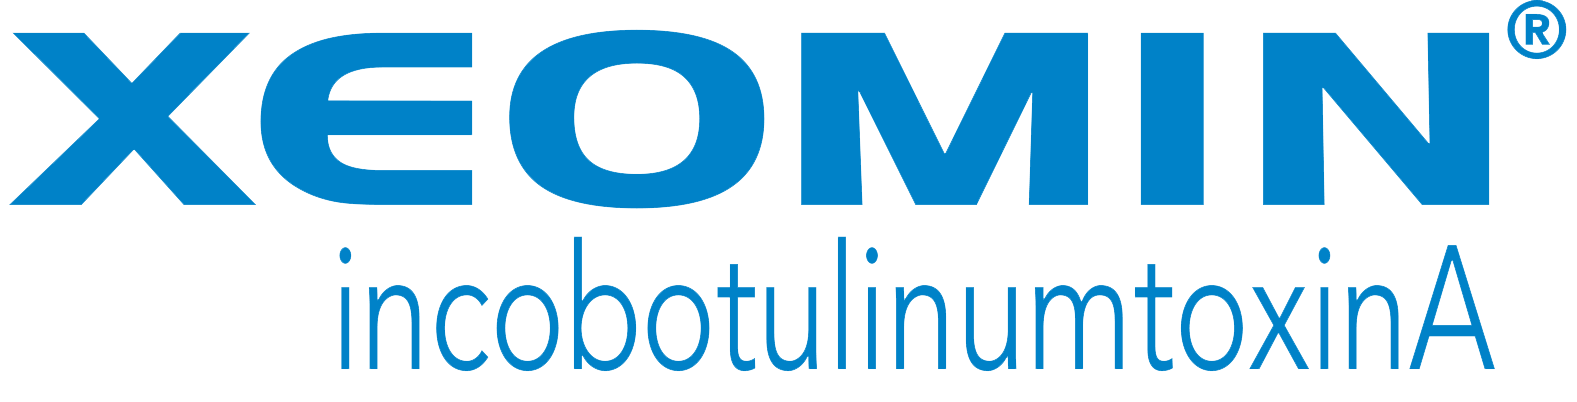 XEOMIN-Logo